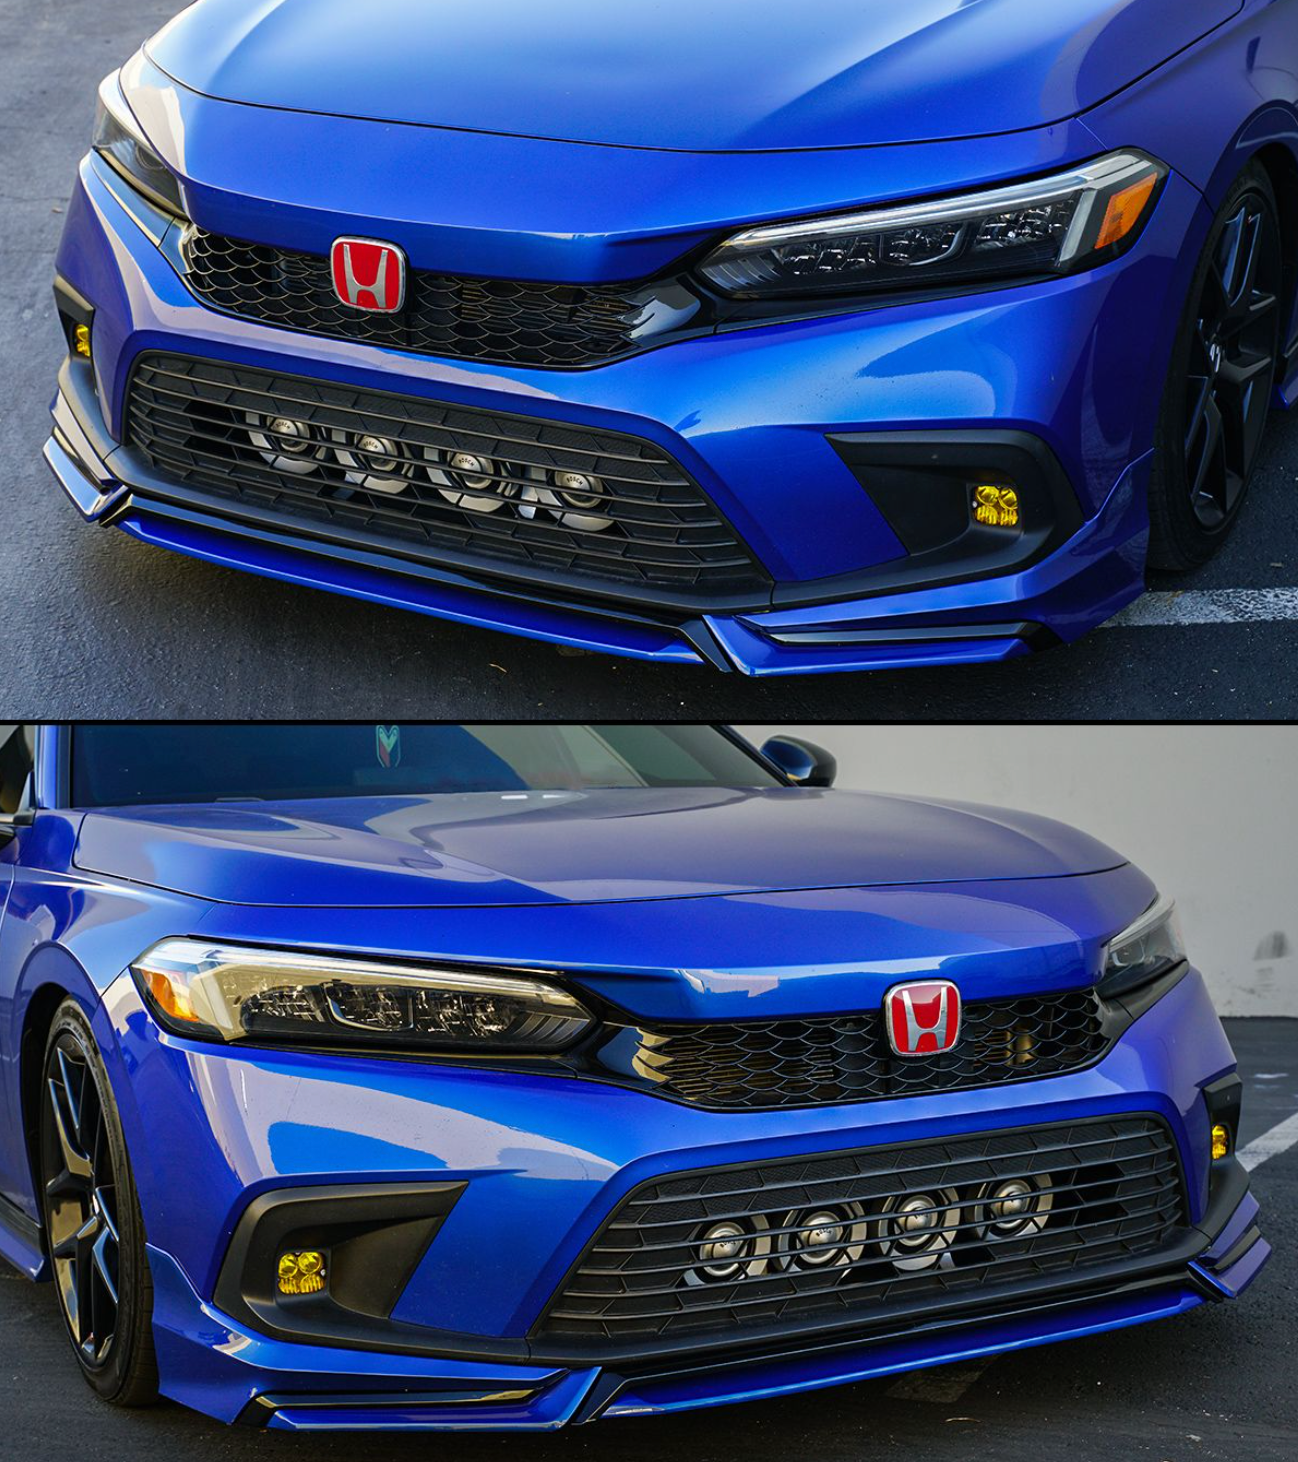 4PC YOF v3 Front Lip [for 2022+ Honda Civic]